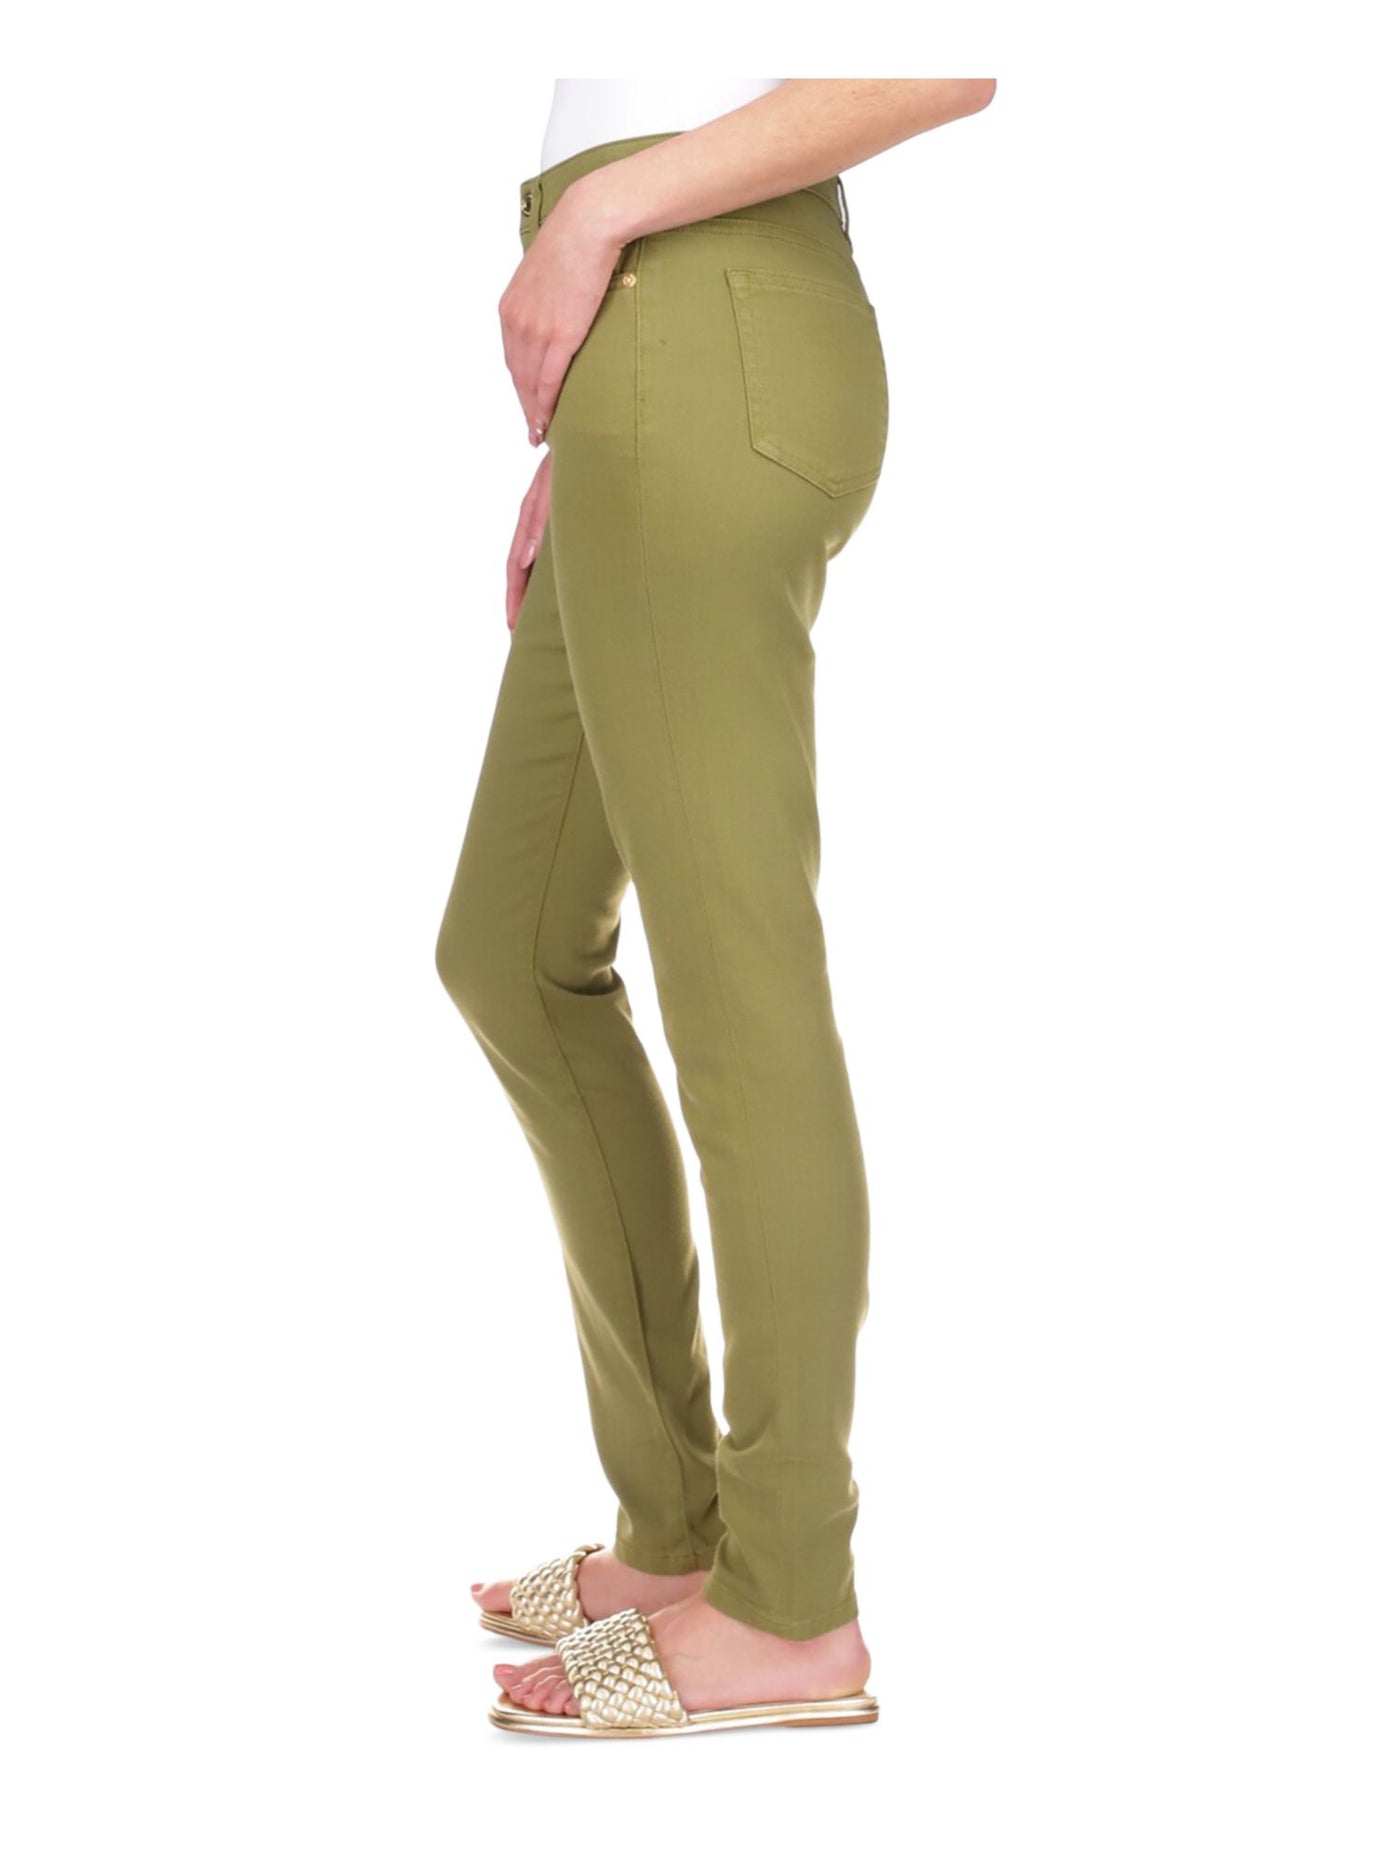 MICHAEL KORS Womens Green Zippered Pocketed Skinny Leg High Waist Jeans Petites 0P